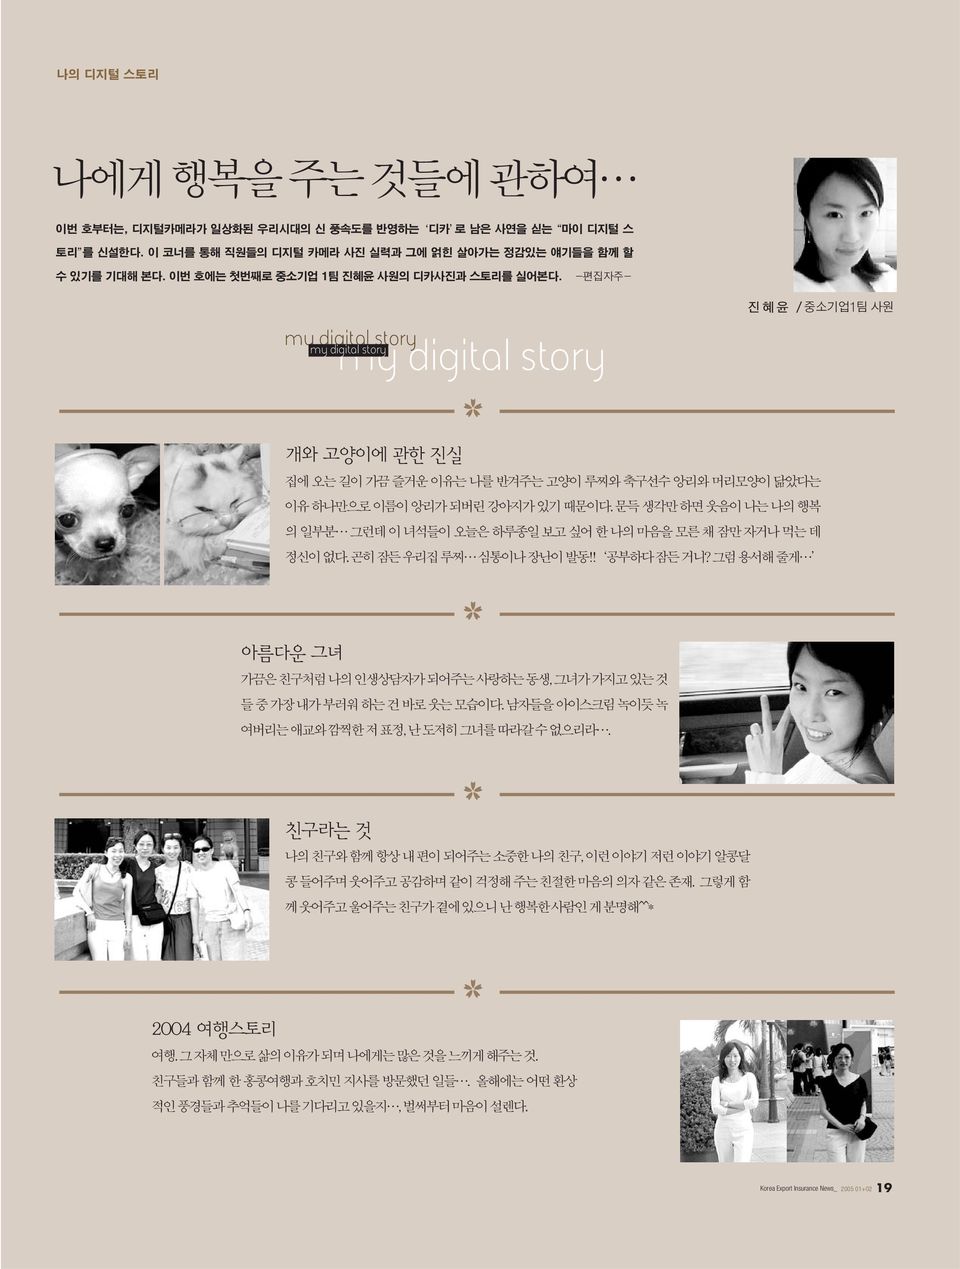 digital story Korea